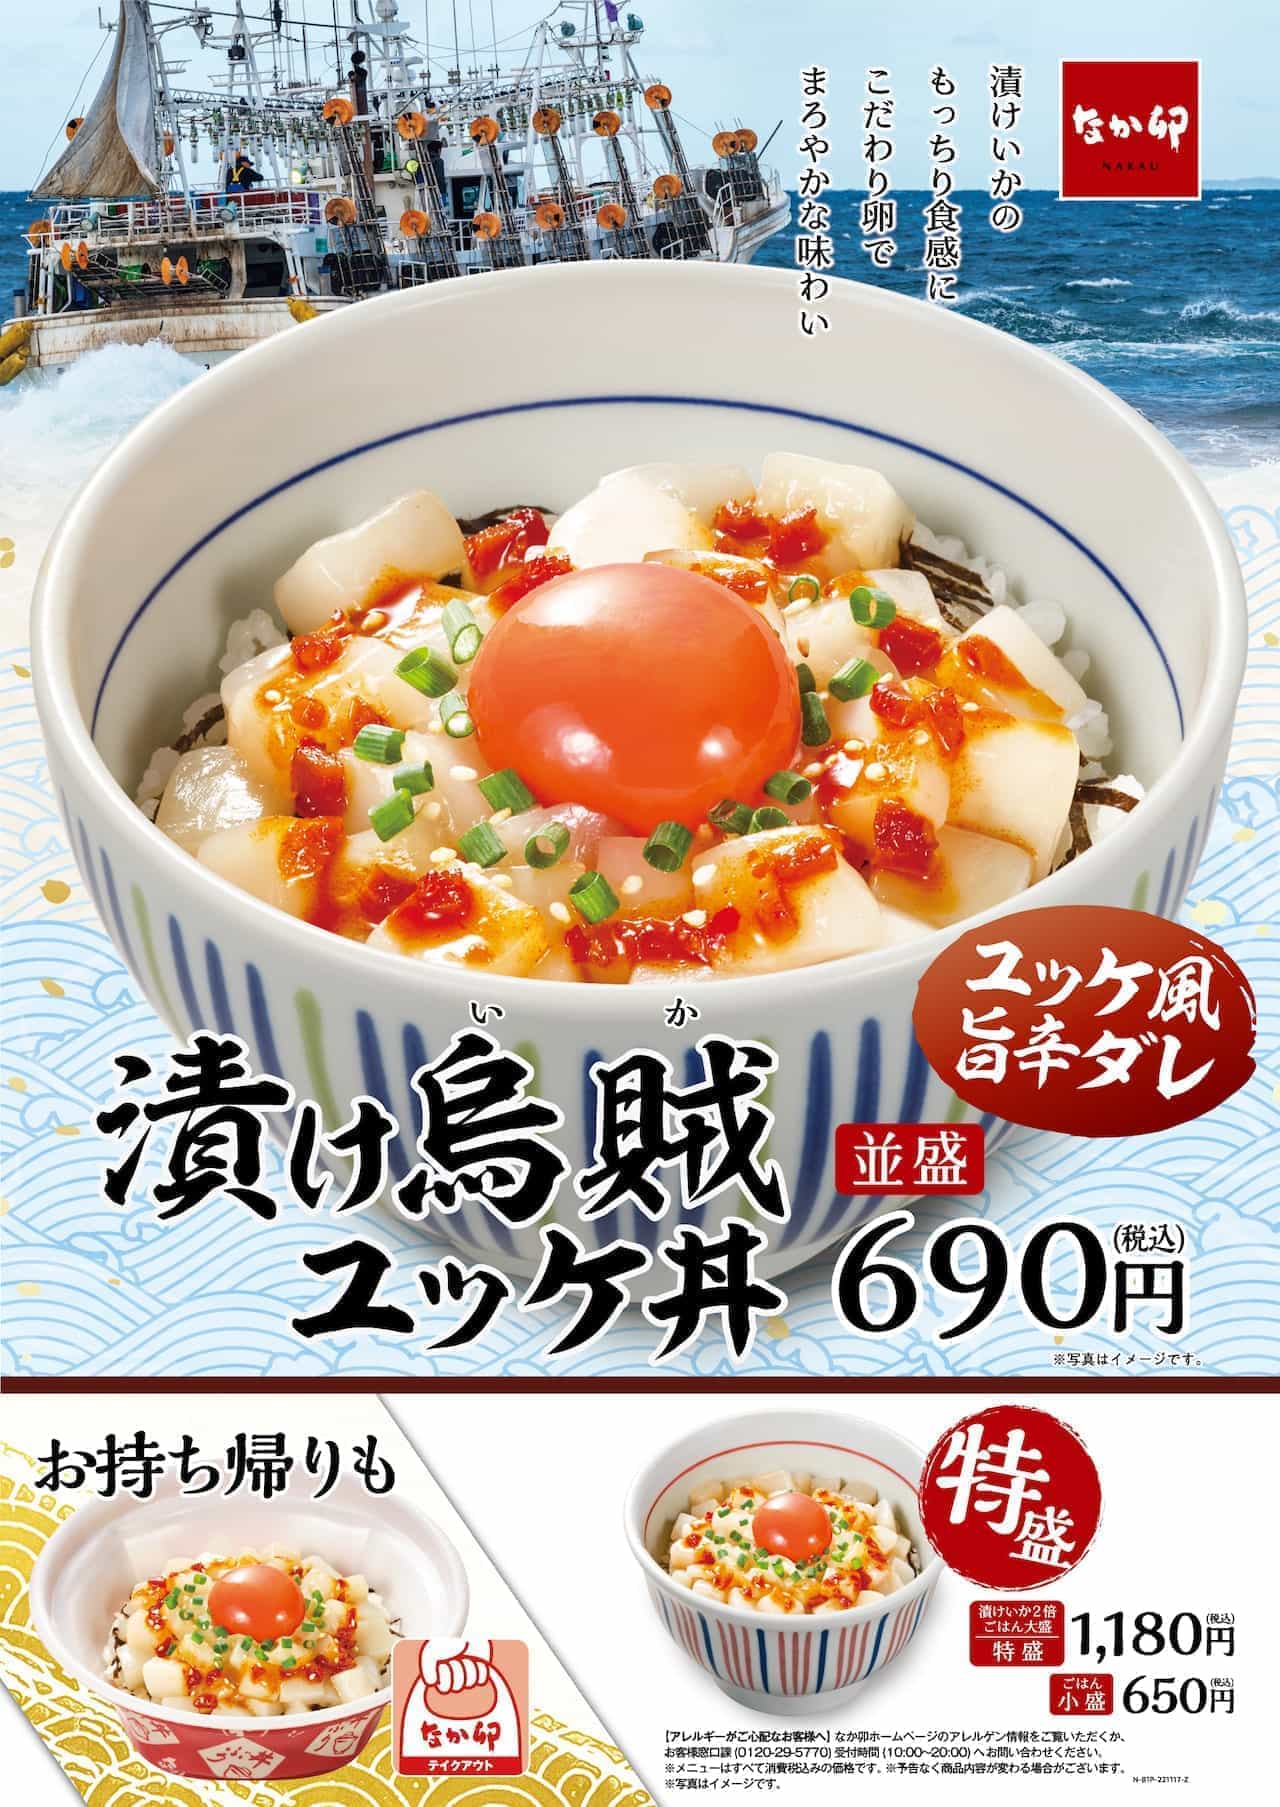 Nakau's new menu item: "Yukke-don (squid with rice topped with yukke)".